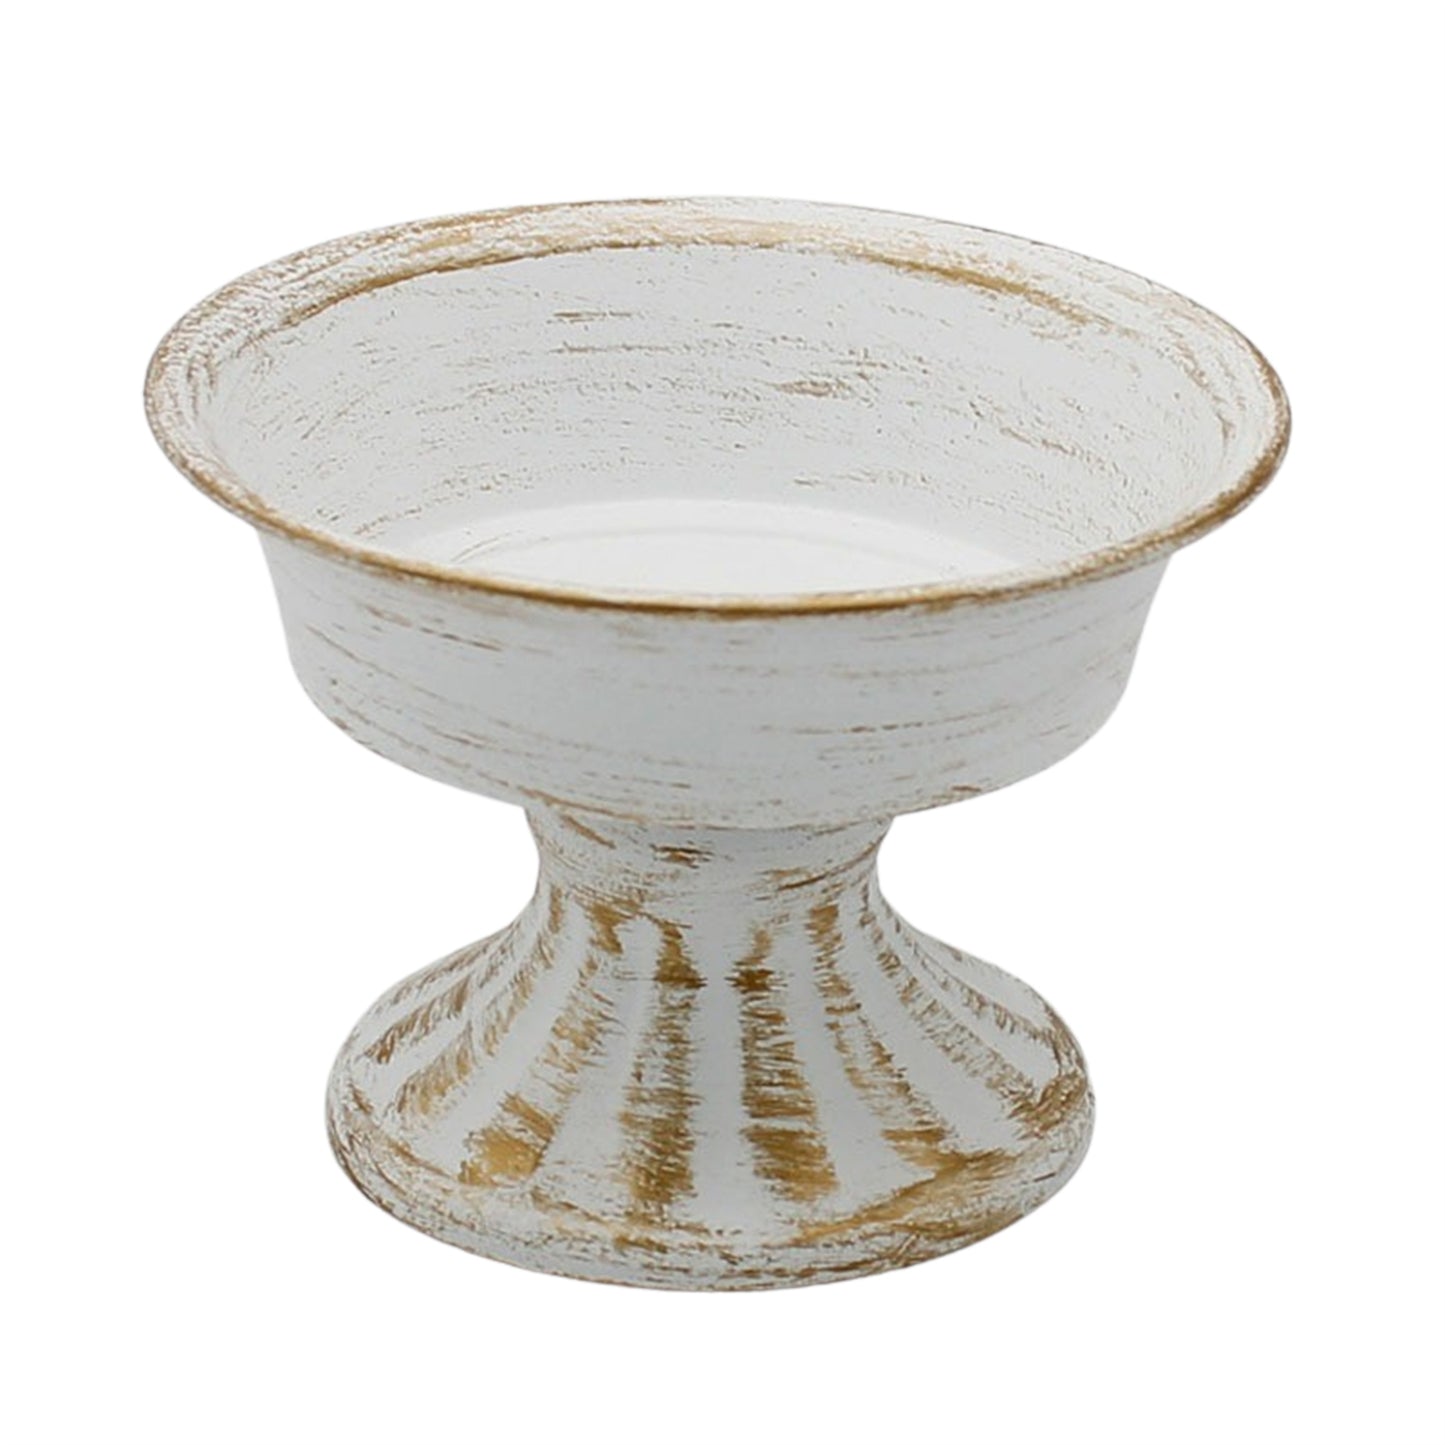 Large Distressed Decorative Cup